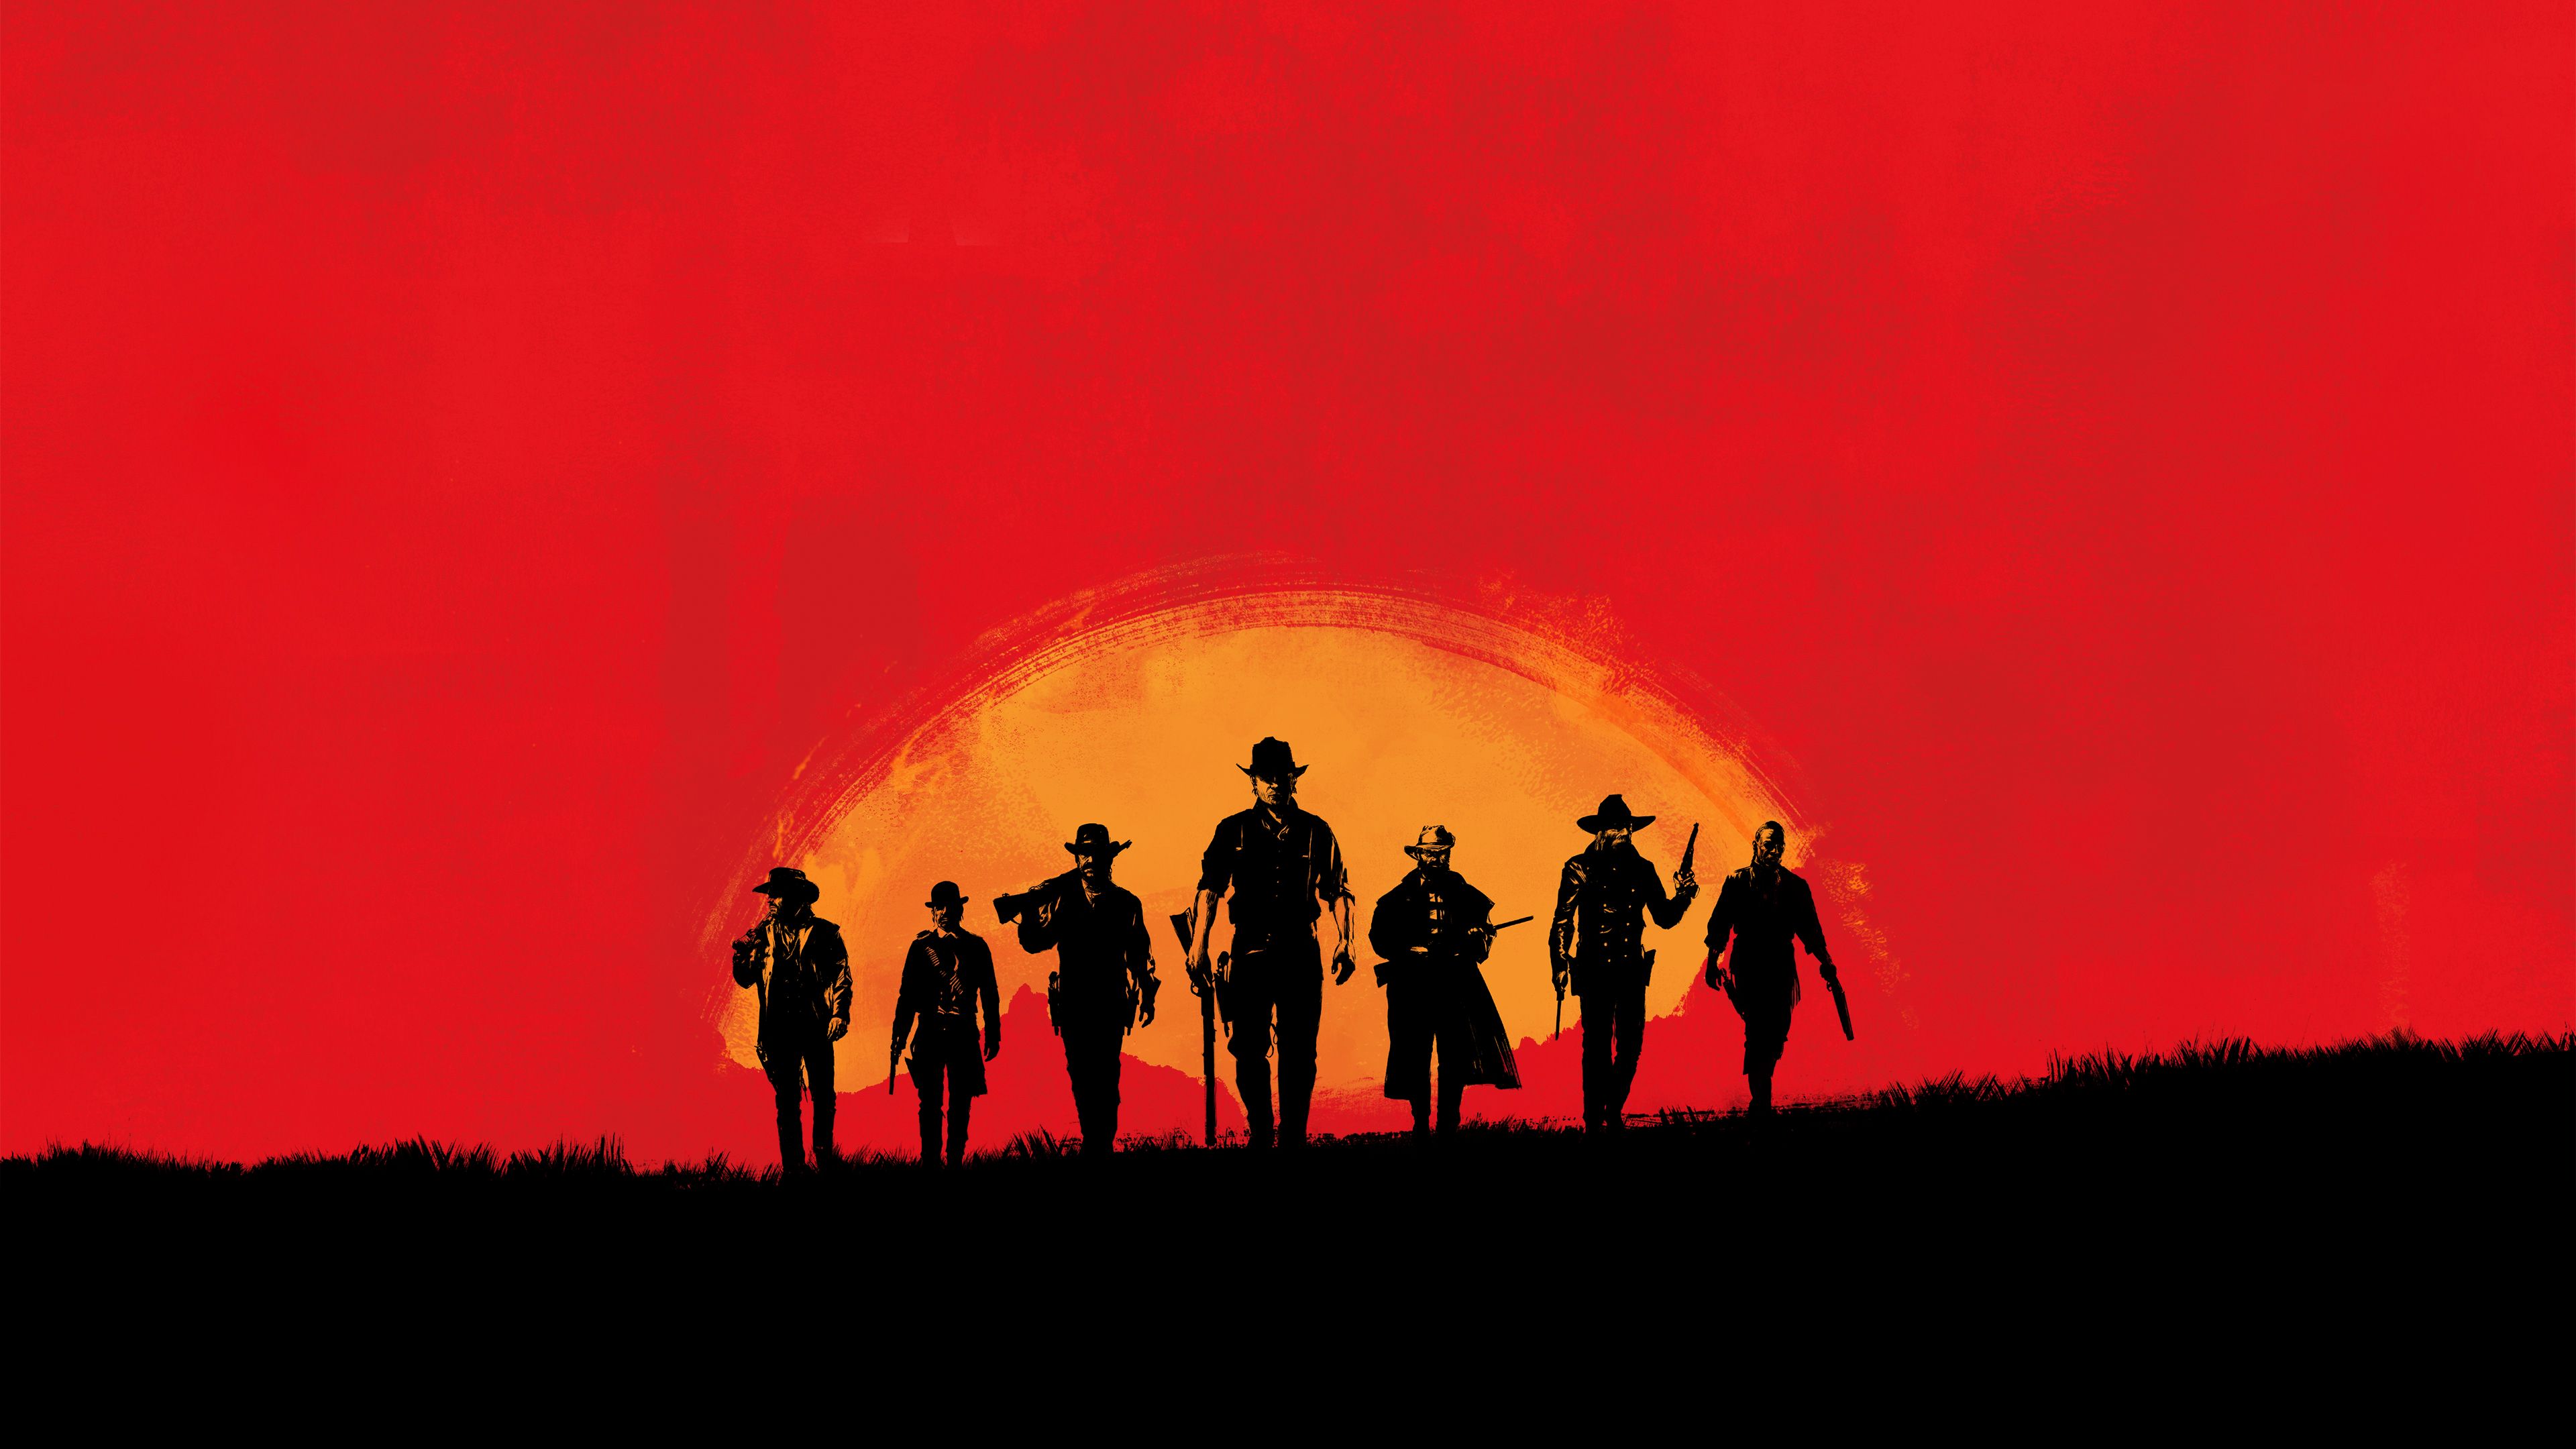 Best Red Dead Redemption 2 Desktop Wallpapers